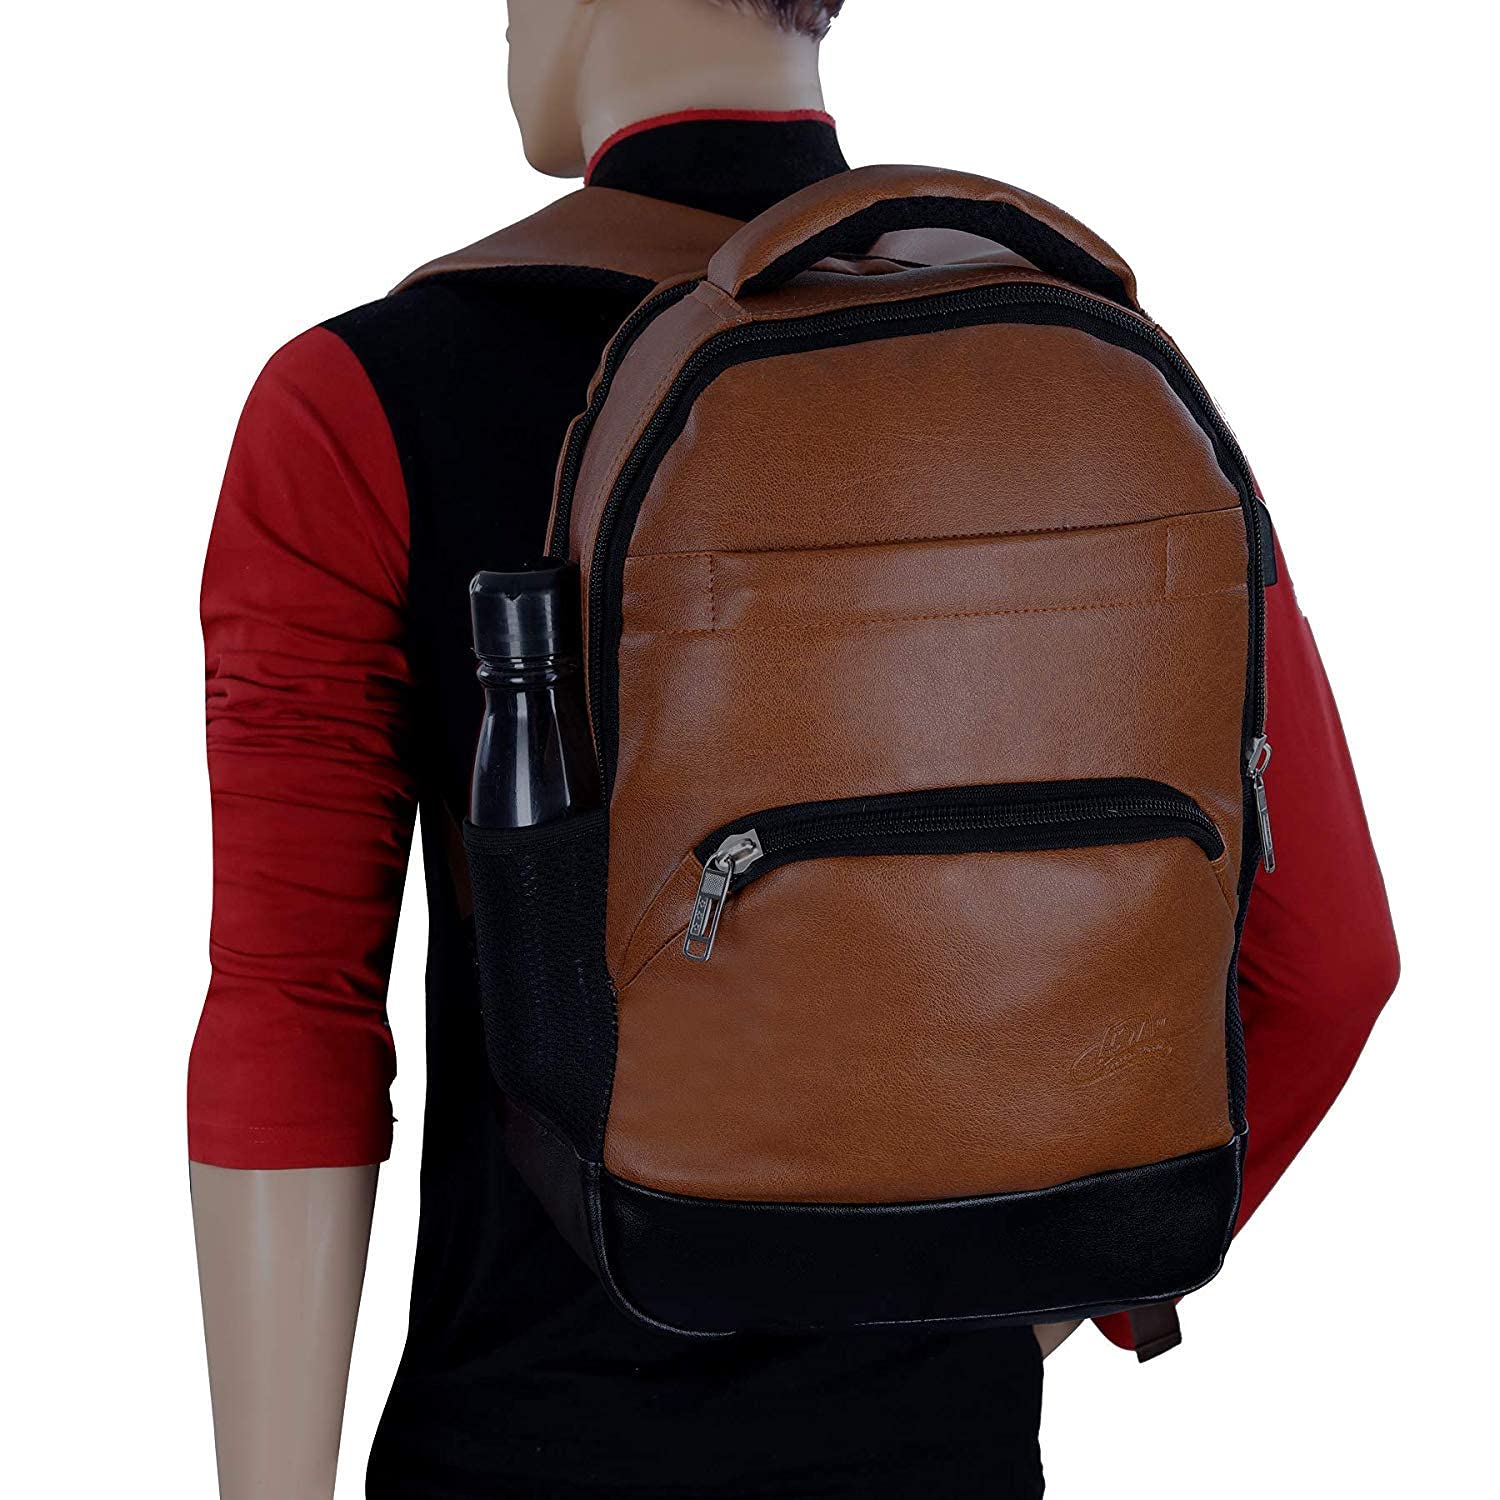 Buy Hip Hop Boy Bag Small Backpack Online in India at Bewakoof